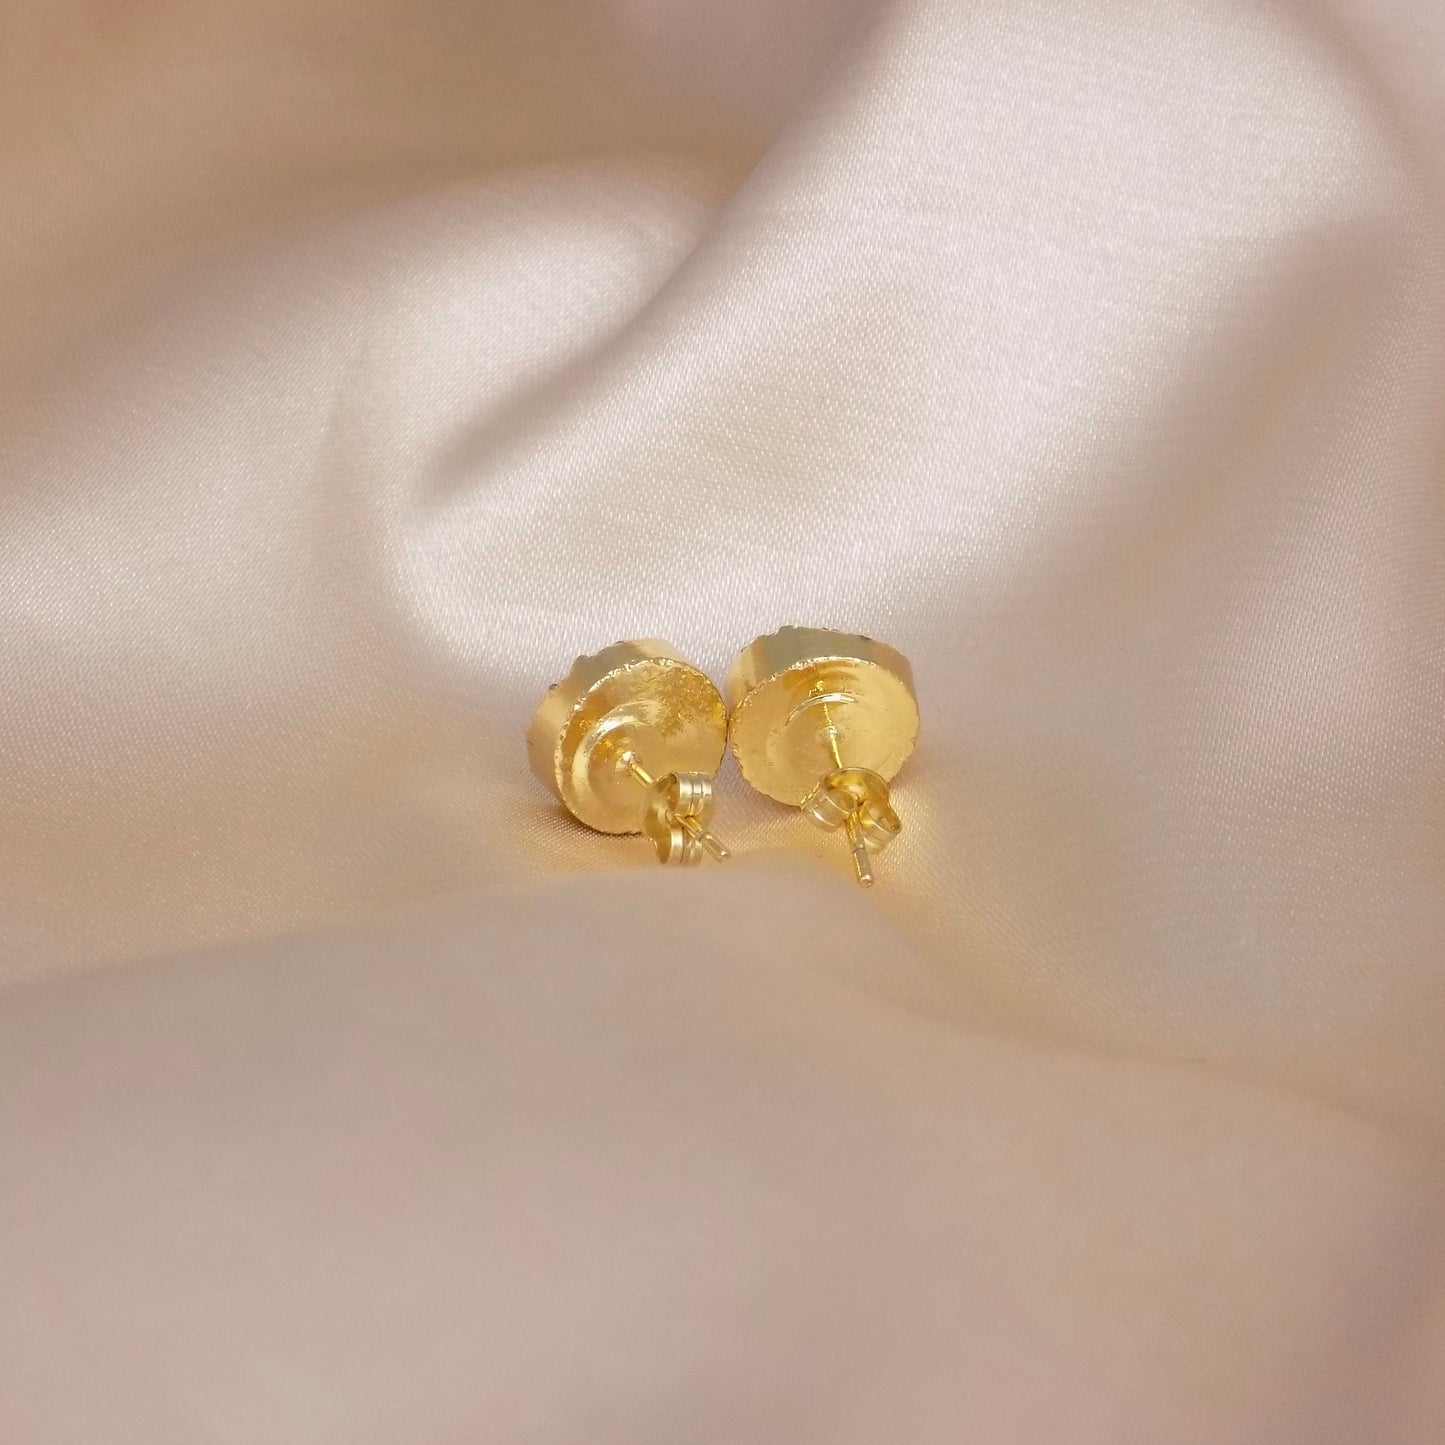 Gray Druzy Earrings Stud, Genuine Druzy Posts Gold, 10mm Raw Gemstone, Gift Women, M6-750